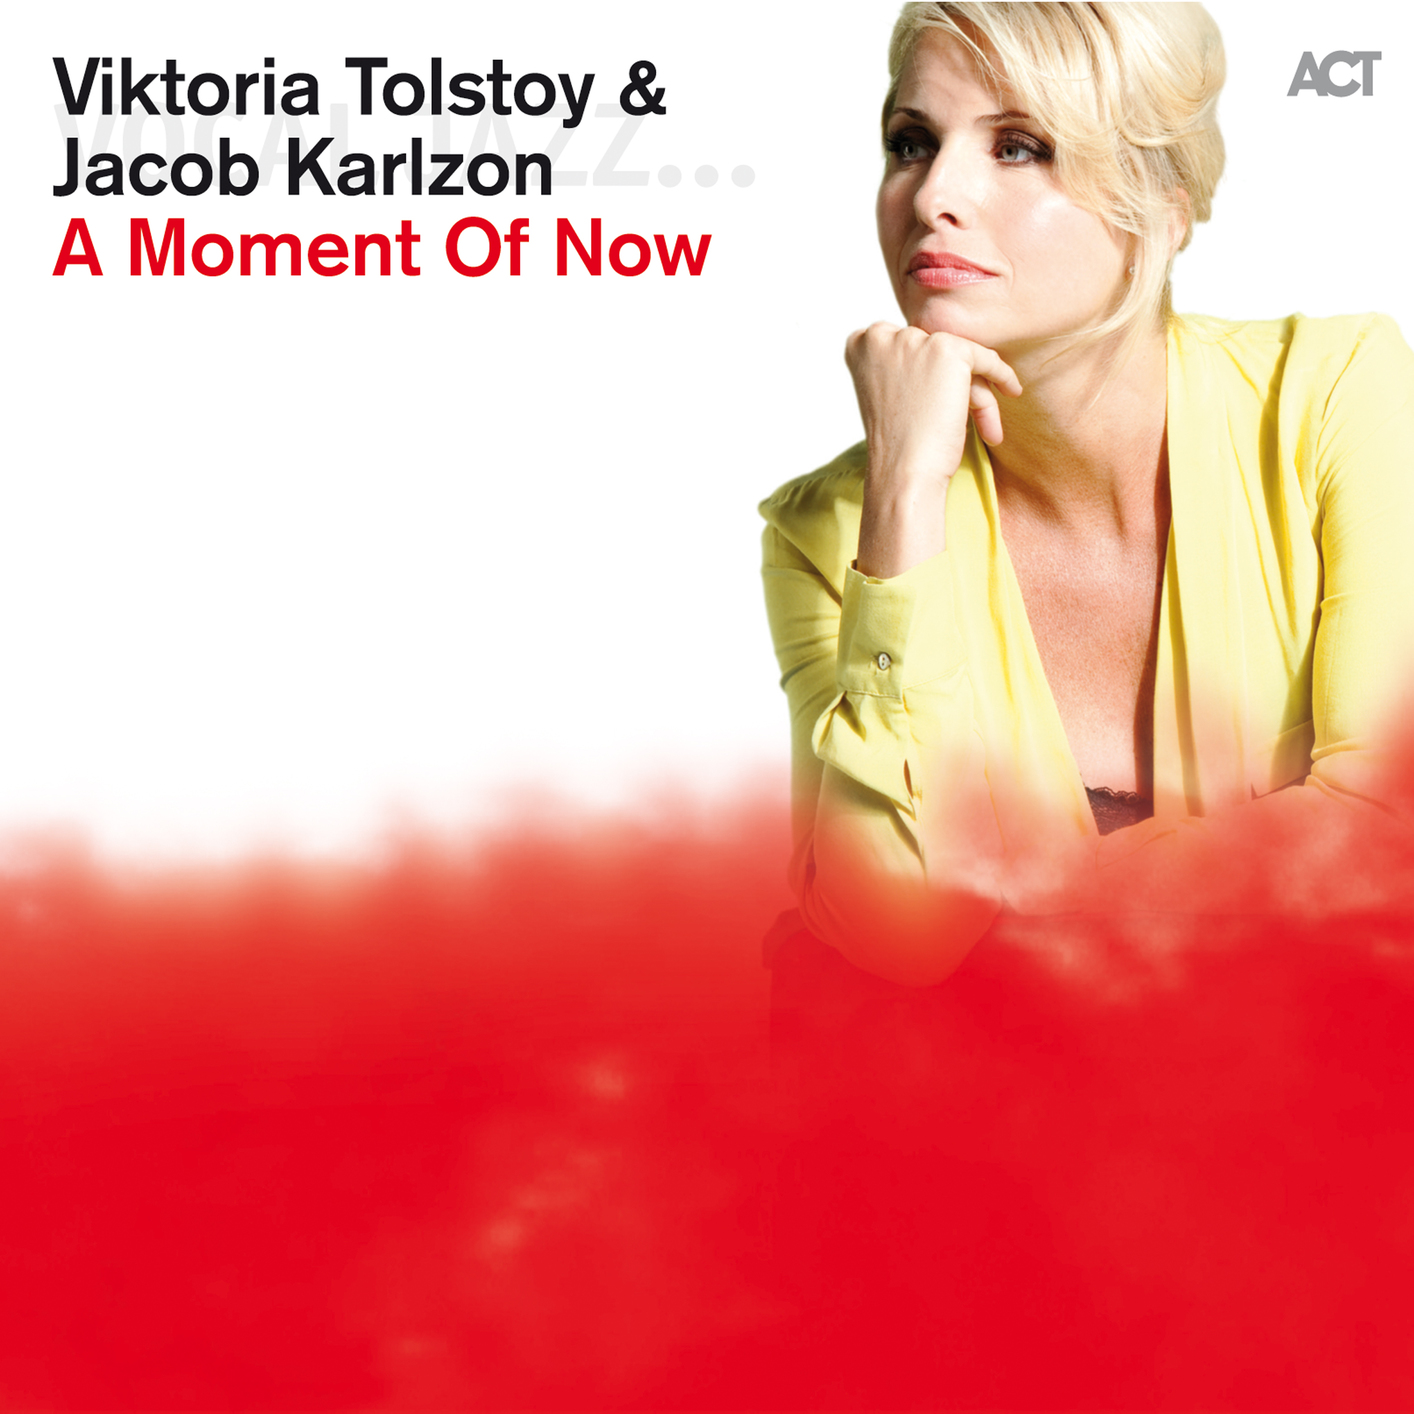 Viktoria Tolstoy & Jacob Karlzon - A Moment Of Now (2013) [HighResAudio FLAC 24bit/96kHz]